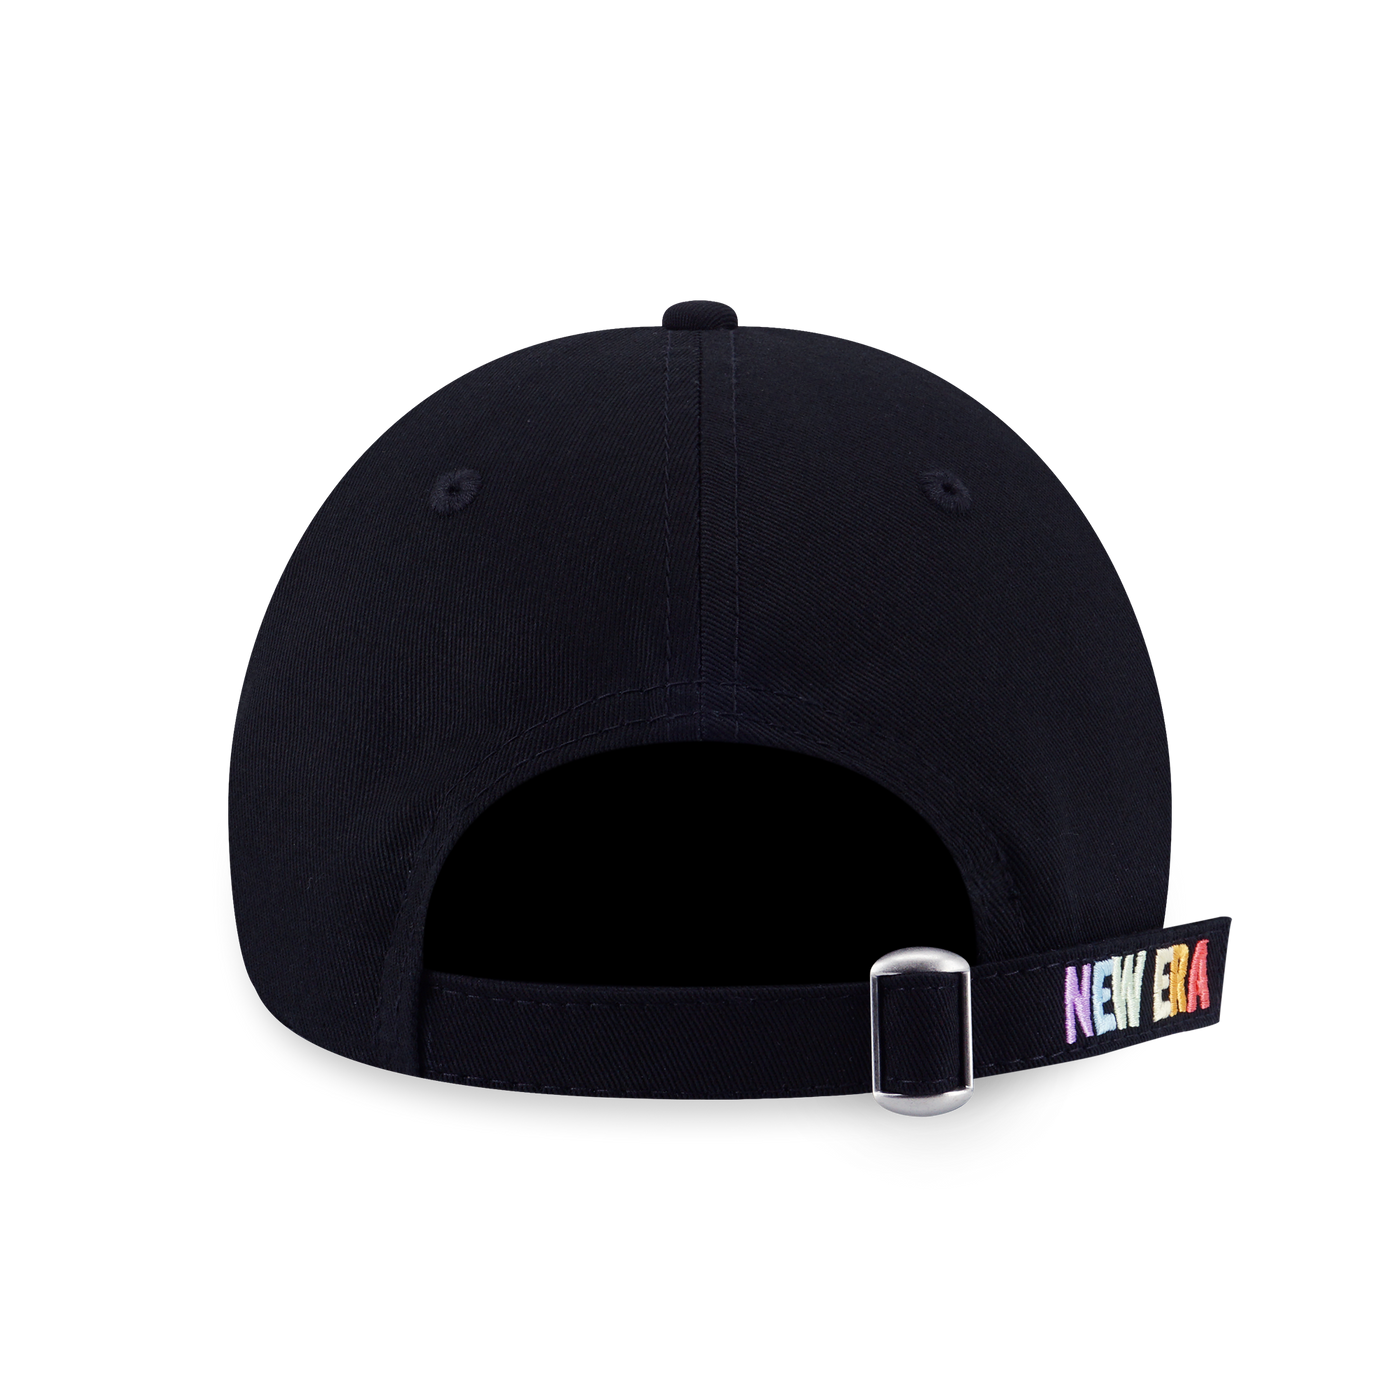 NEW ERA LIGHT RAINBOW LAYERED LOGO BLACK 9TWENTY CAP